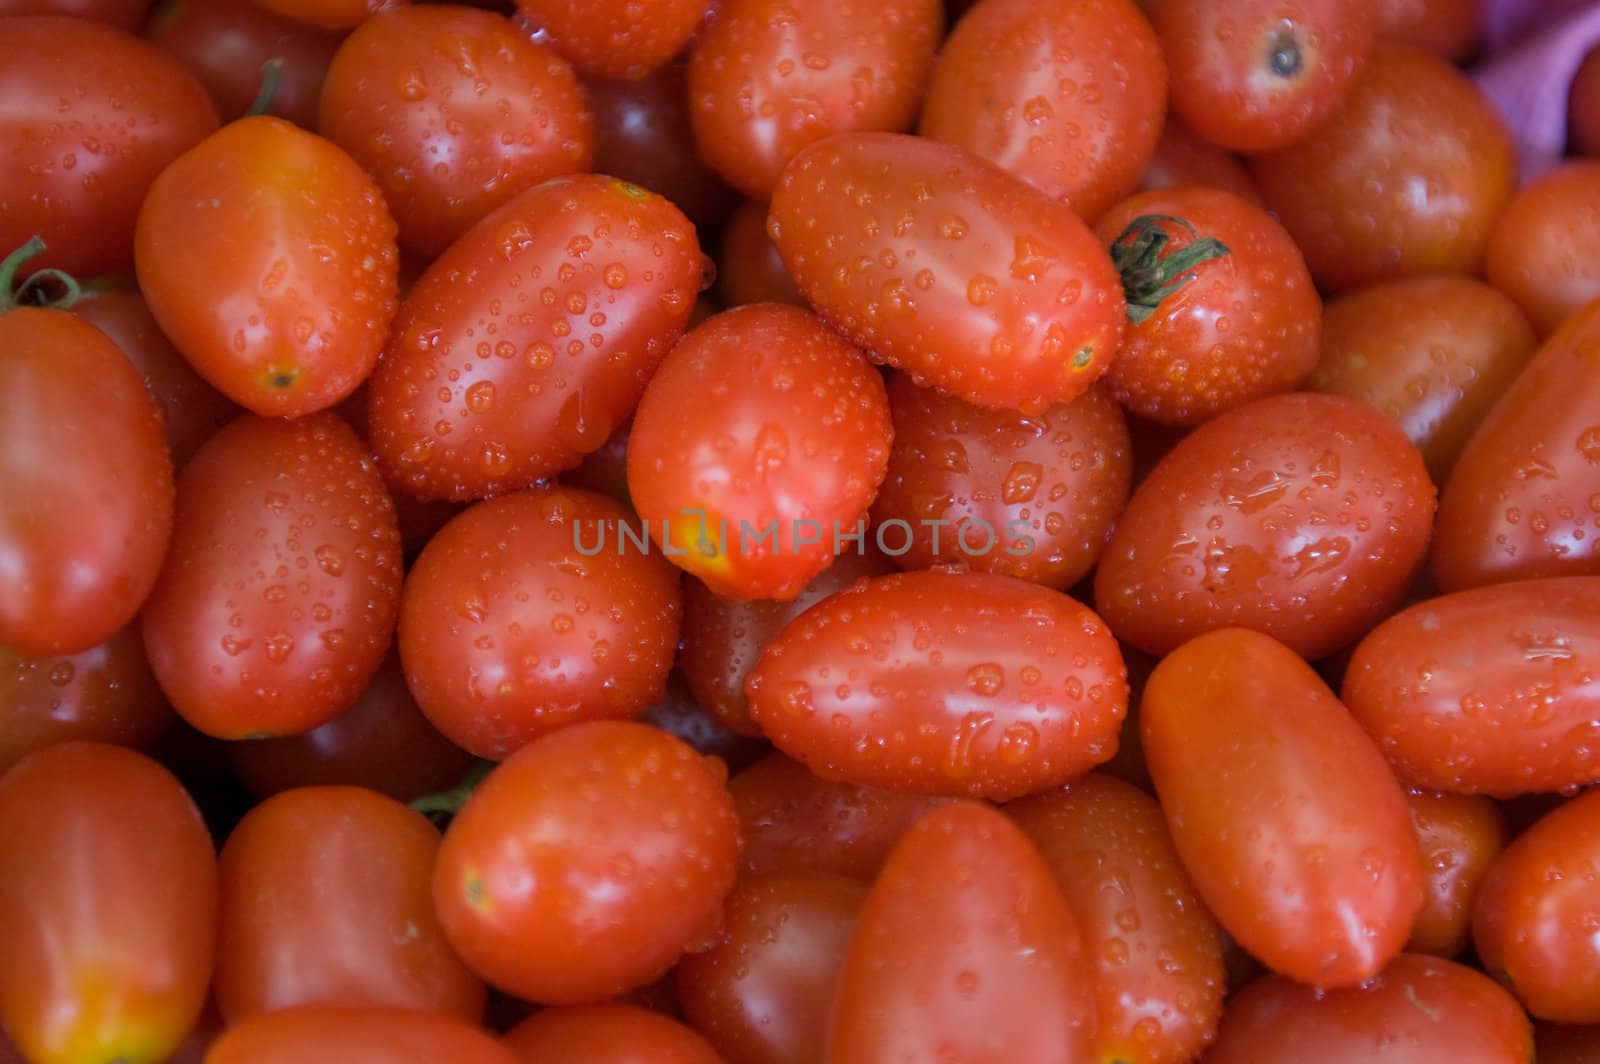 Tomatoes by studioreddot